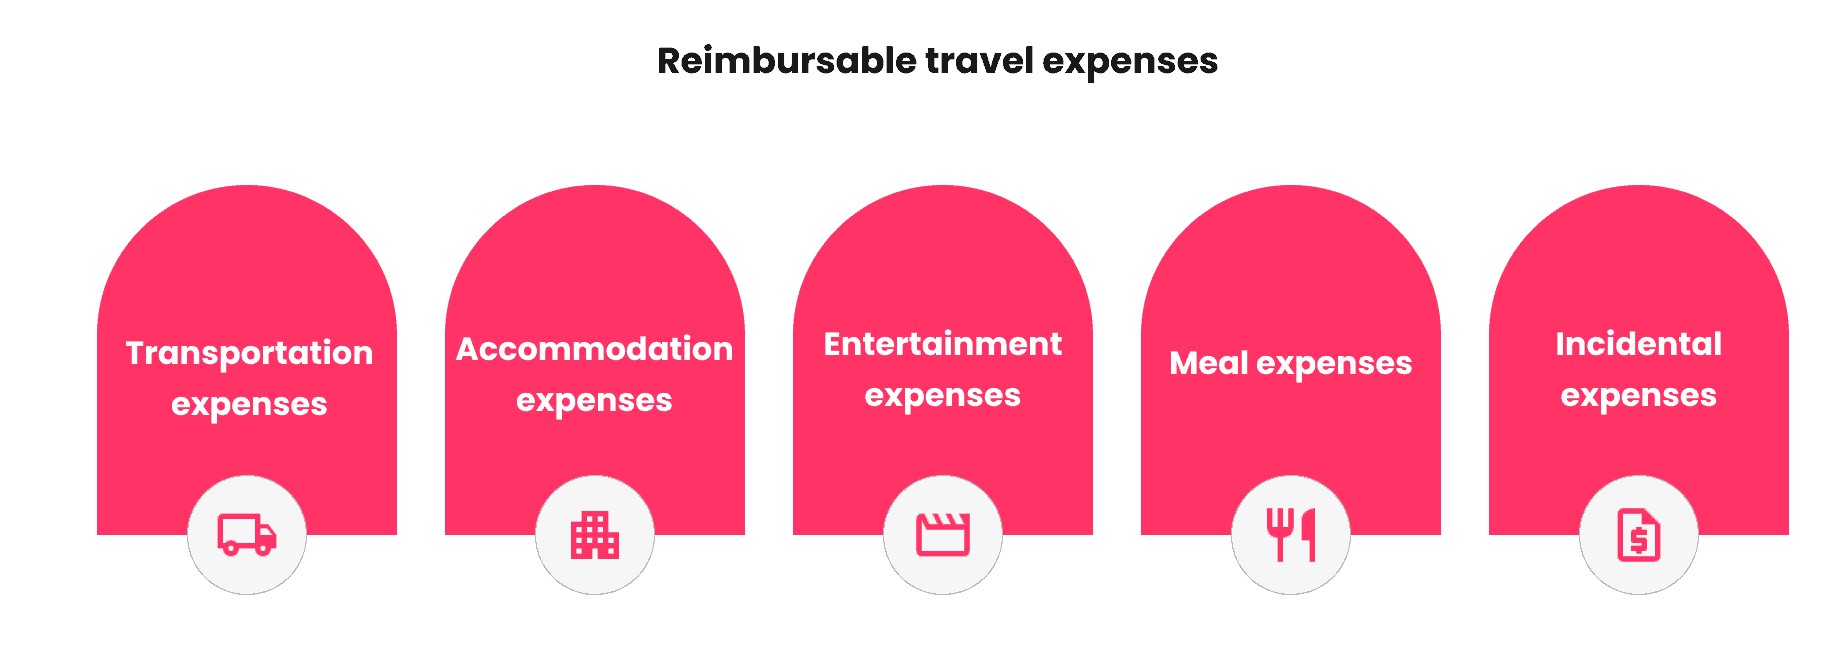 Reimbursable travel expenses